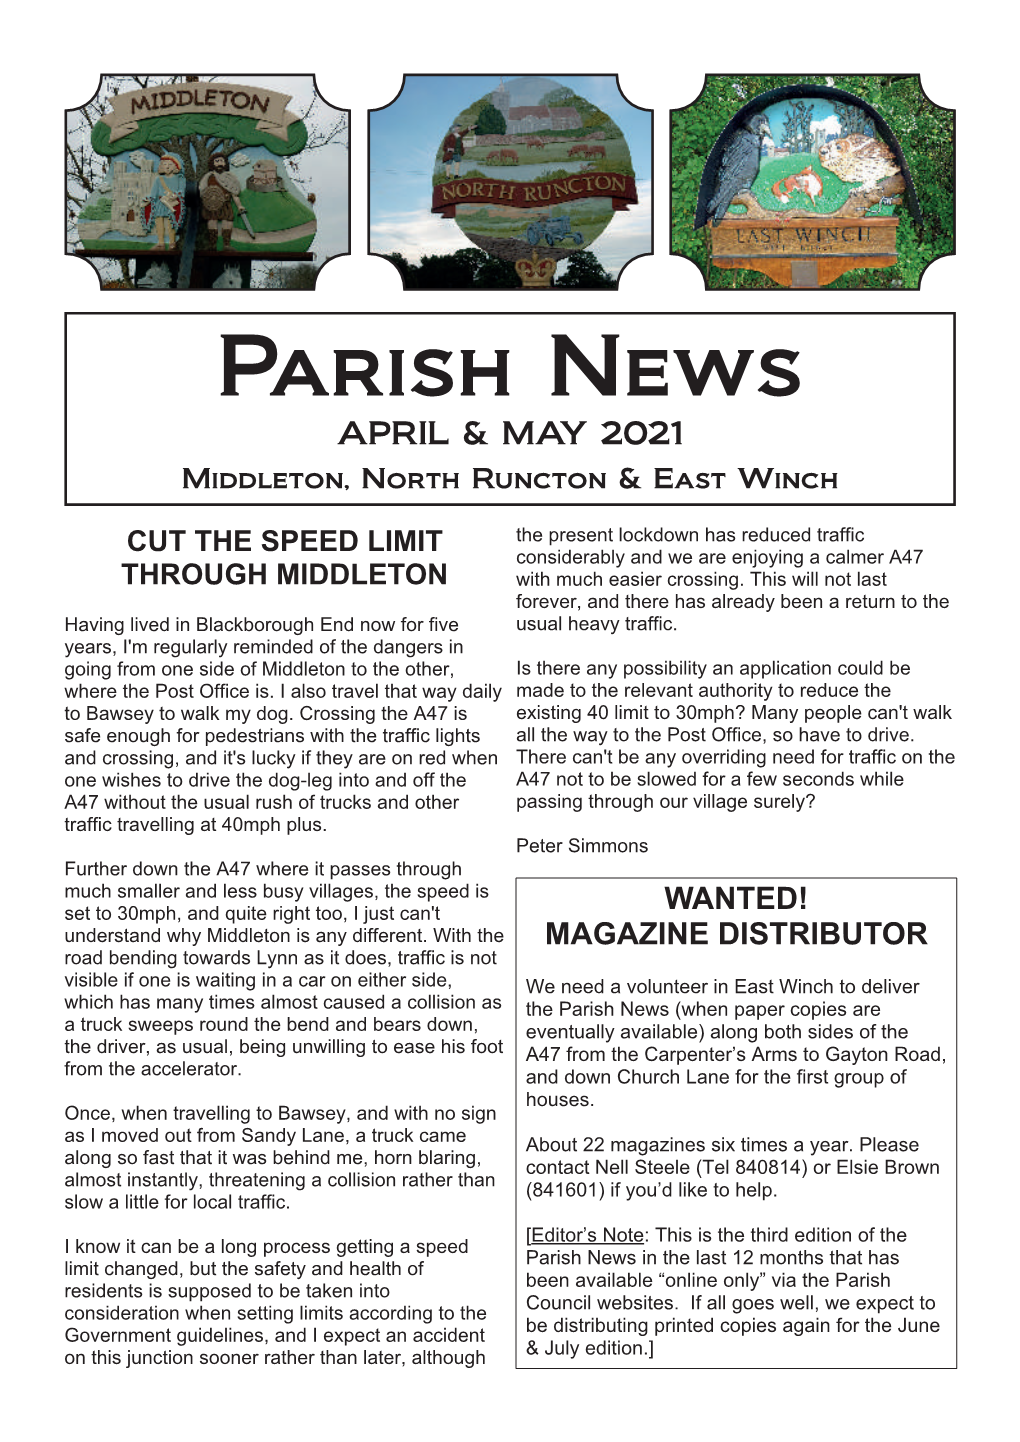 Parish News June & July Correct 2020